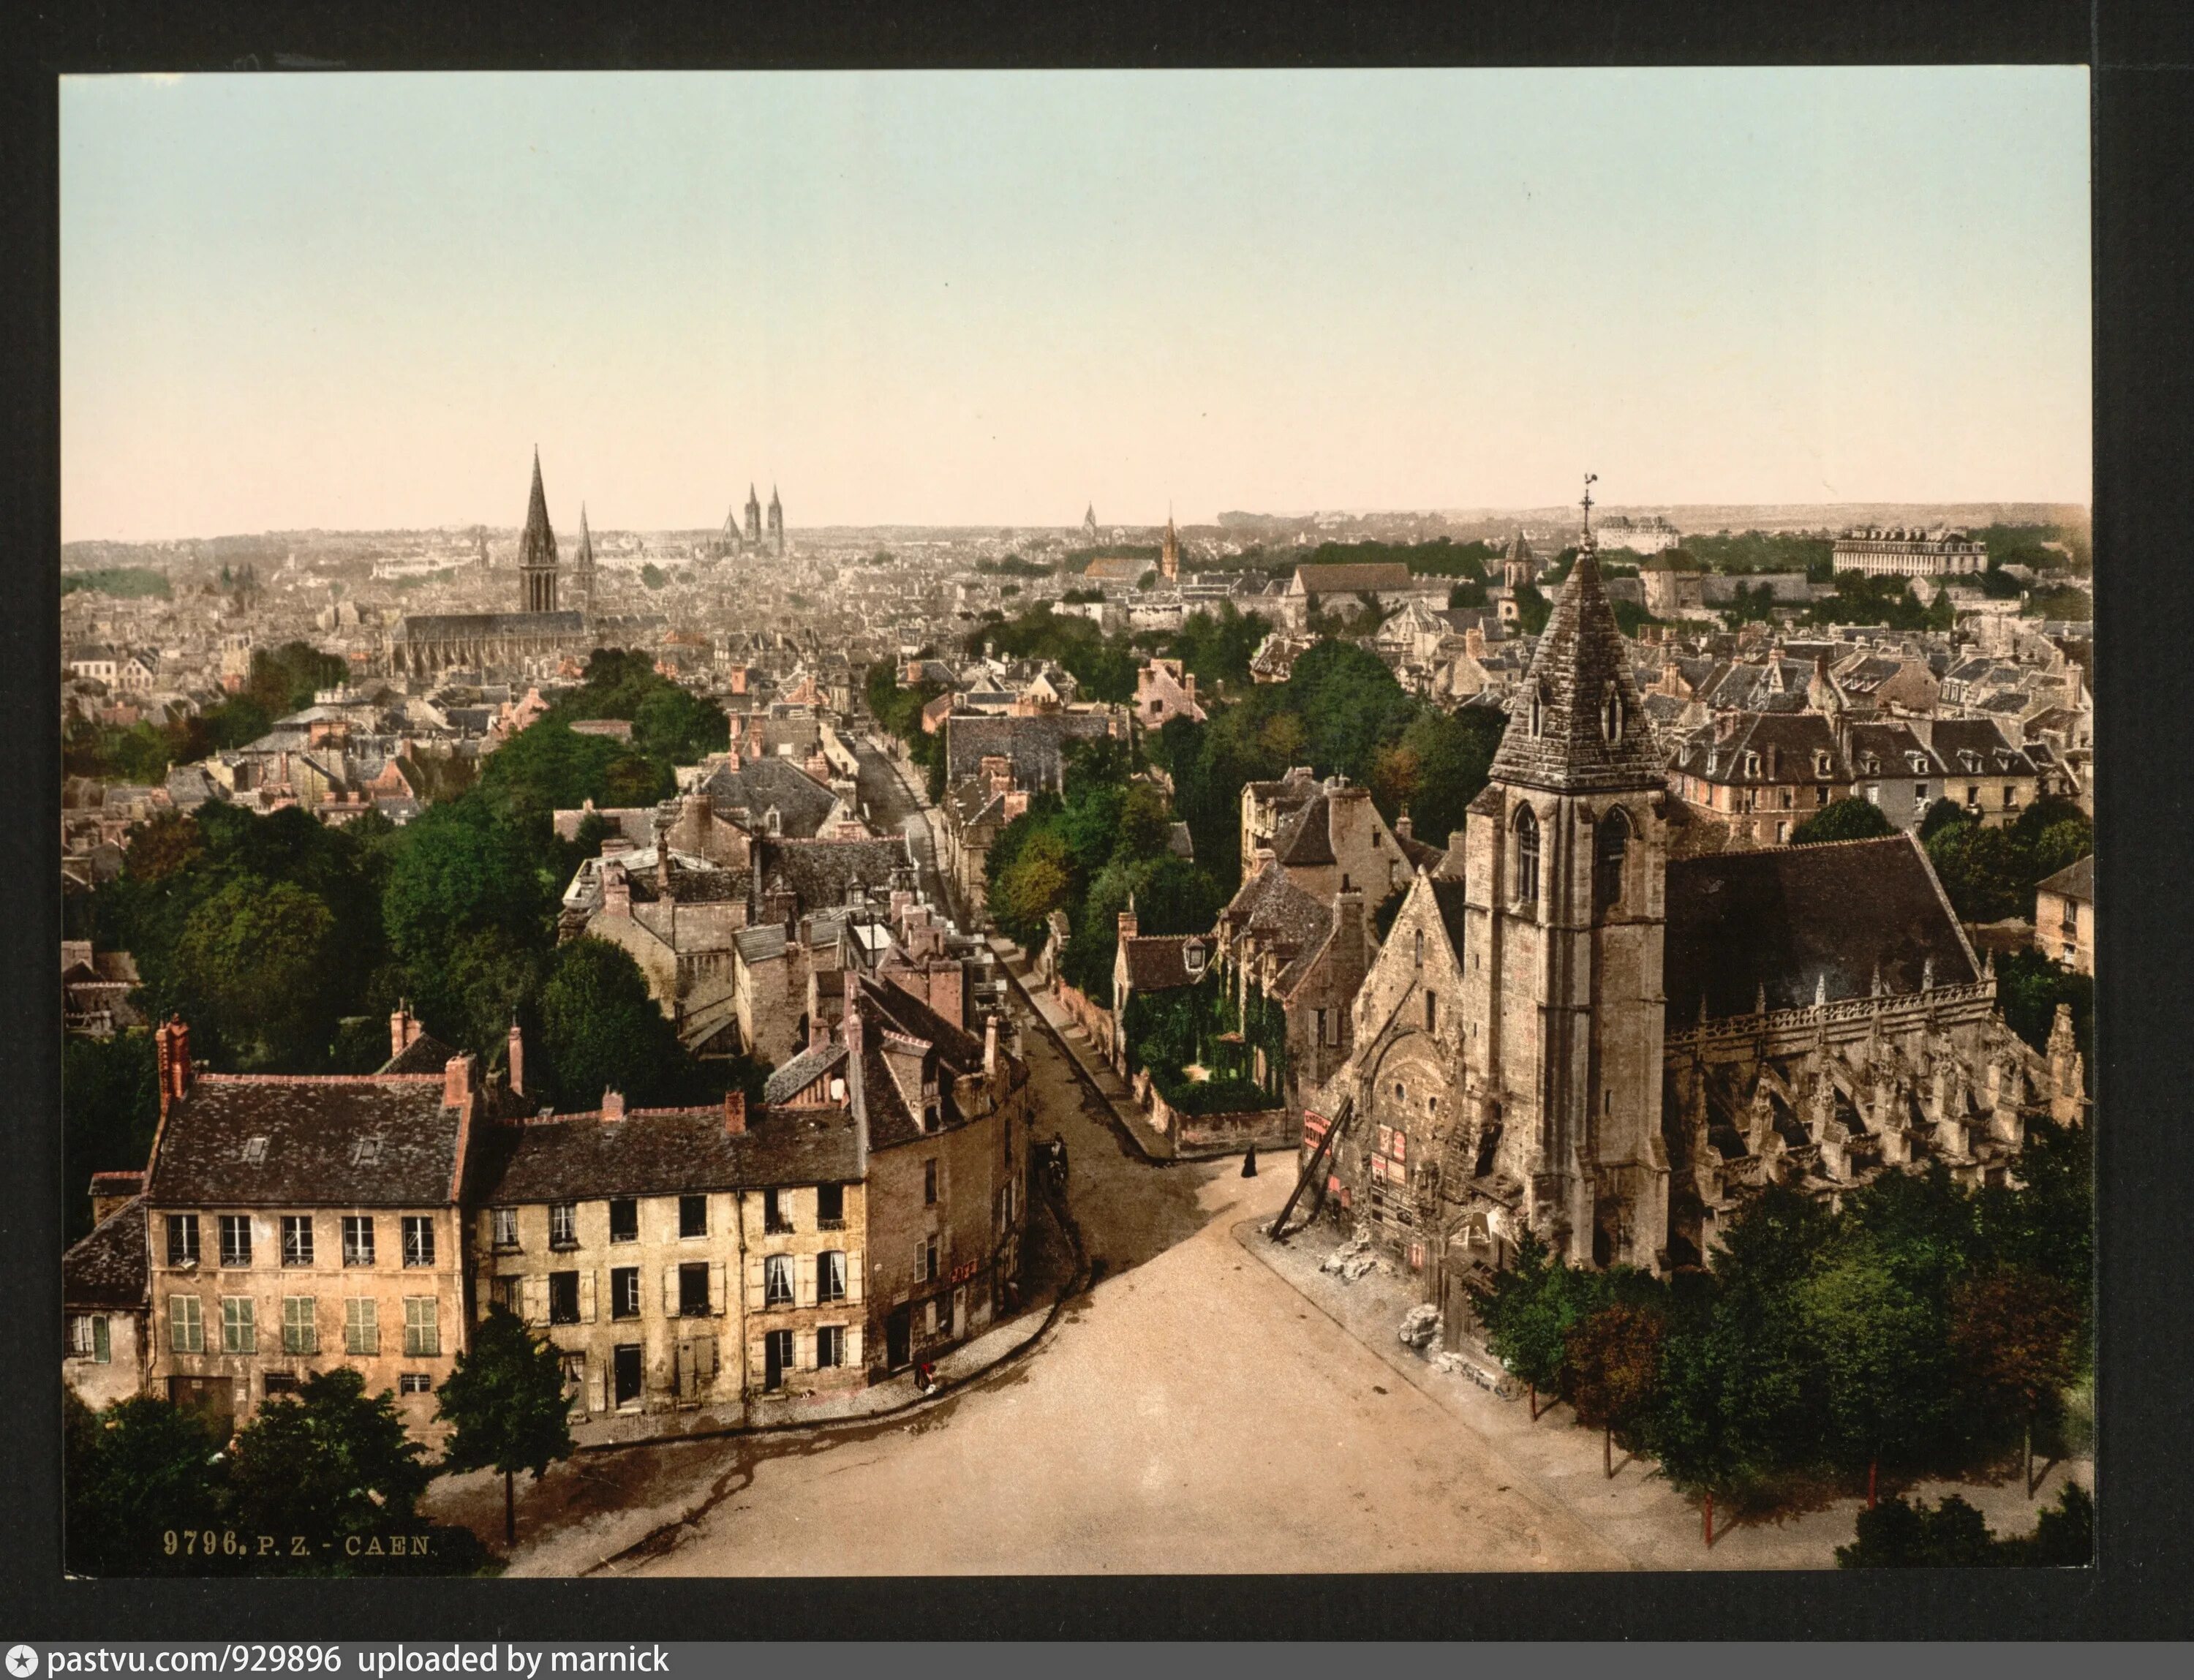 Кан Нормандия Франция. Caen Франция. Франция 1890. Замок 17 века Франция Нормандия.